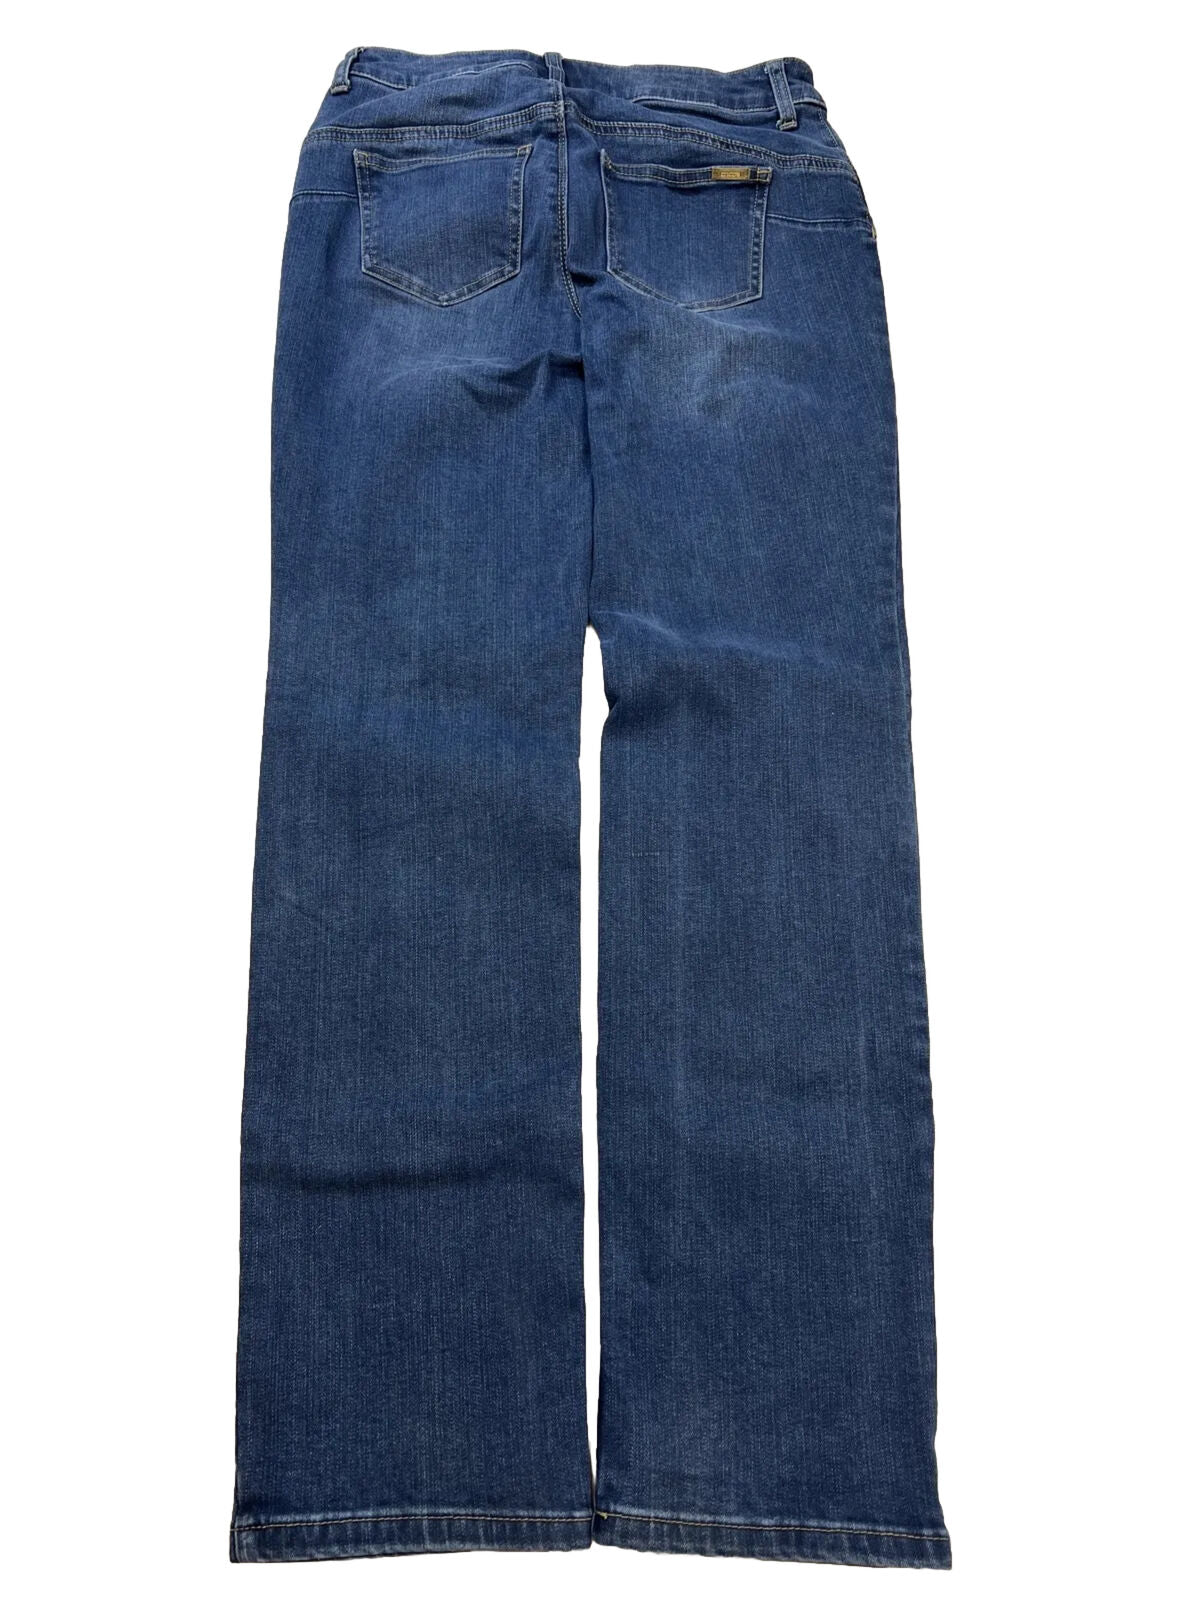 Chico's Women's Medium Wash So Lifting Slimming Jeans - 0/4